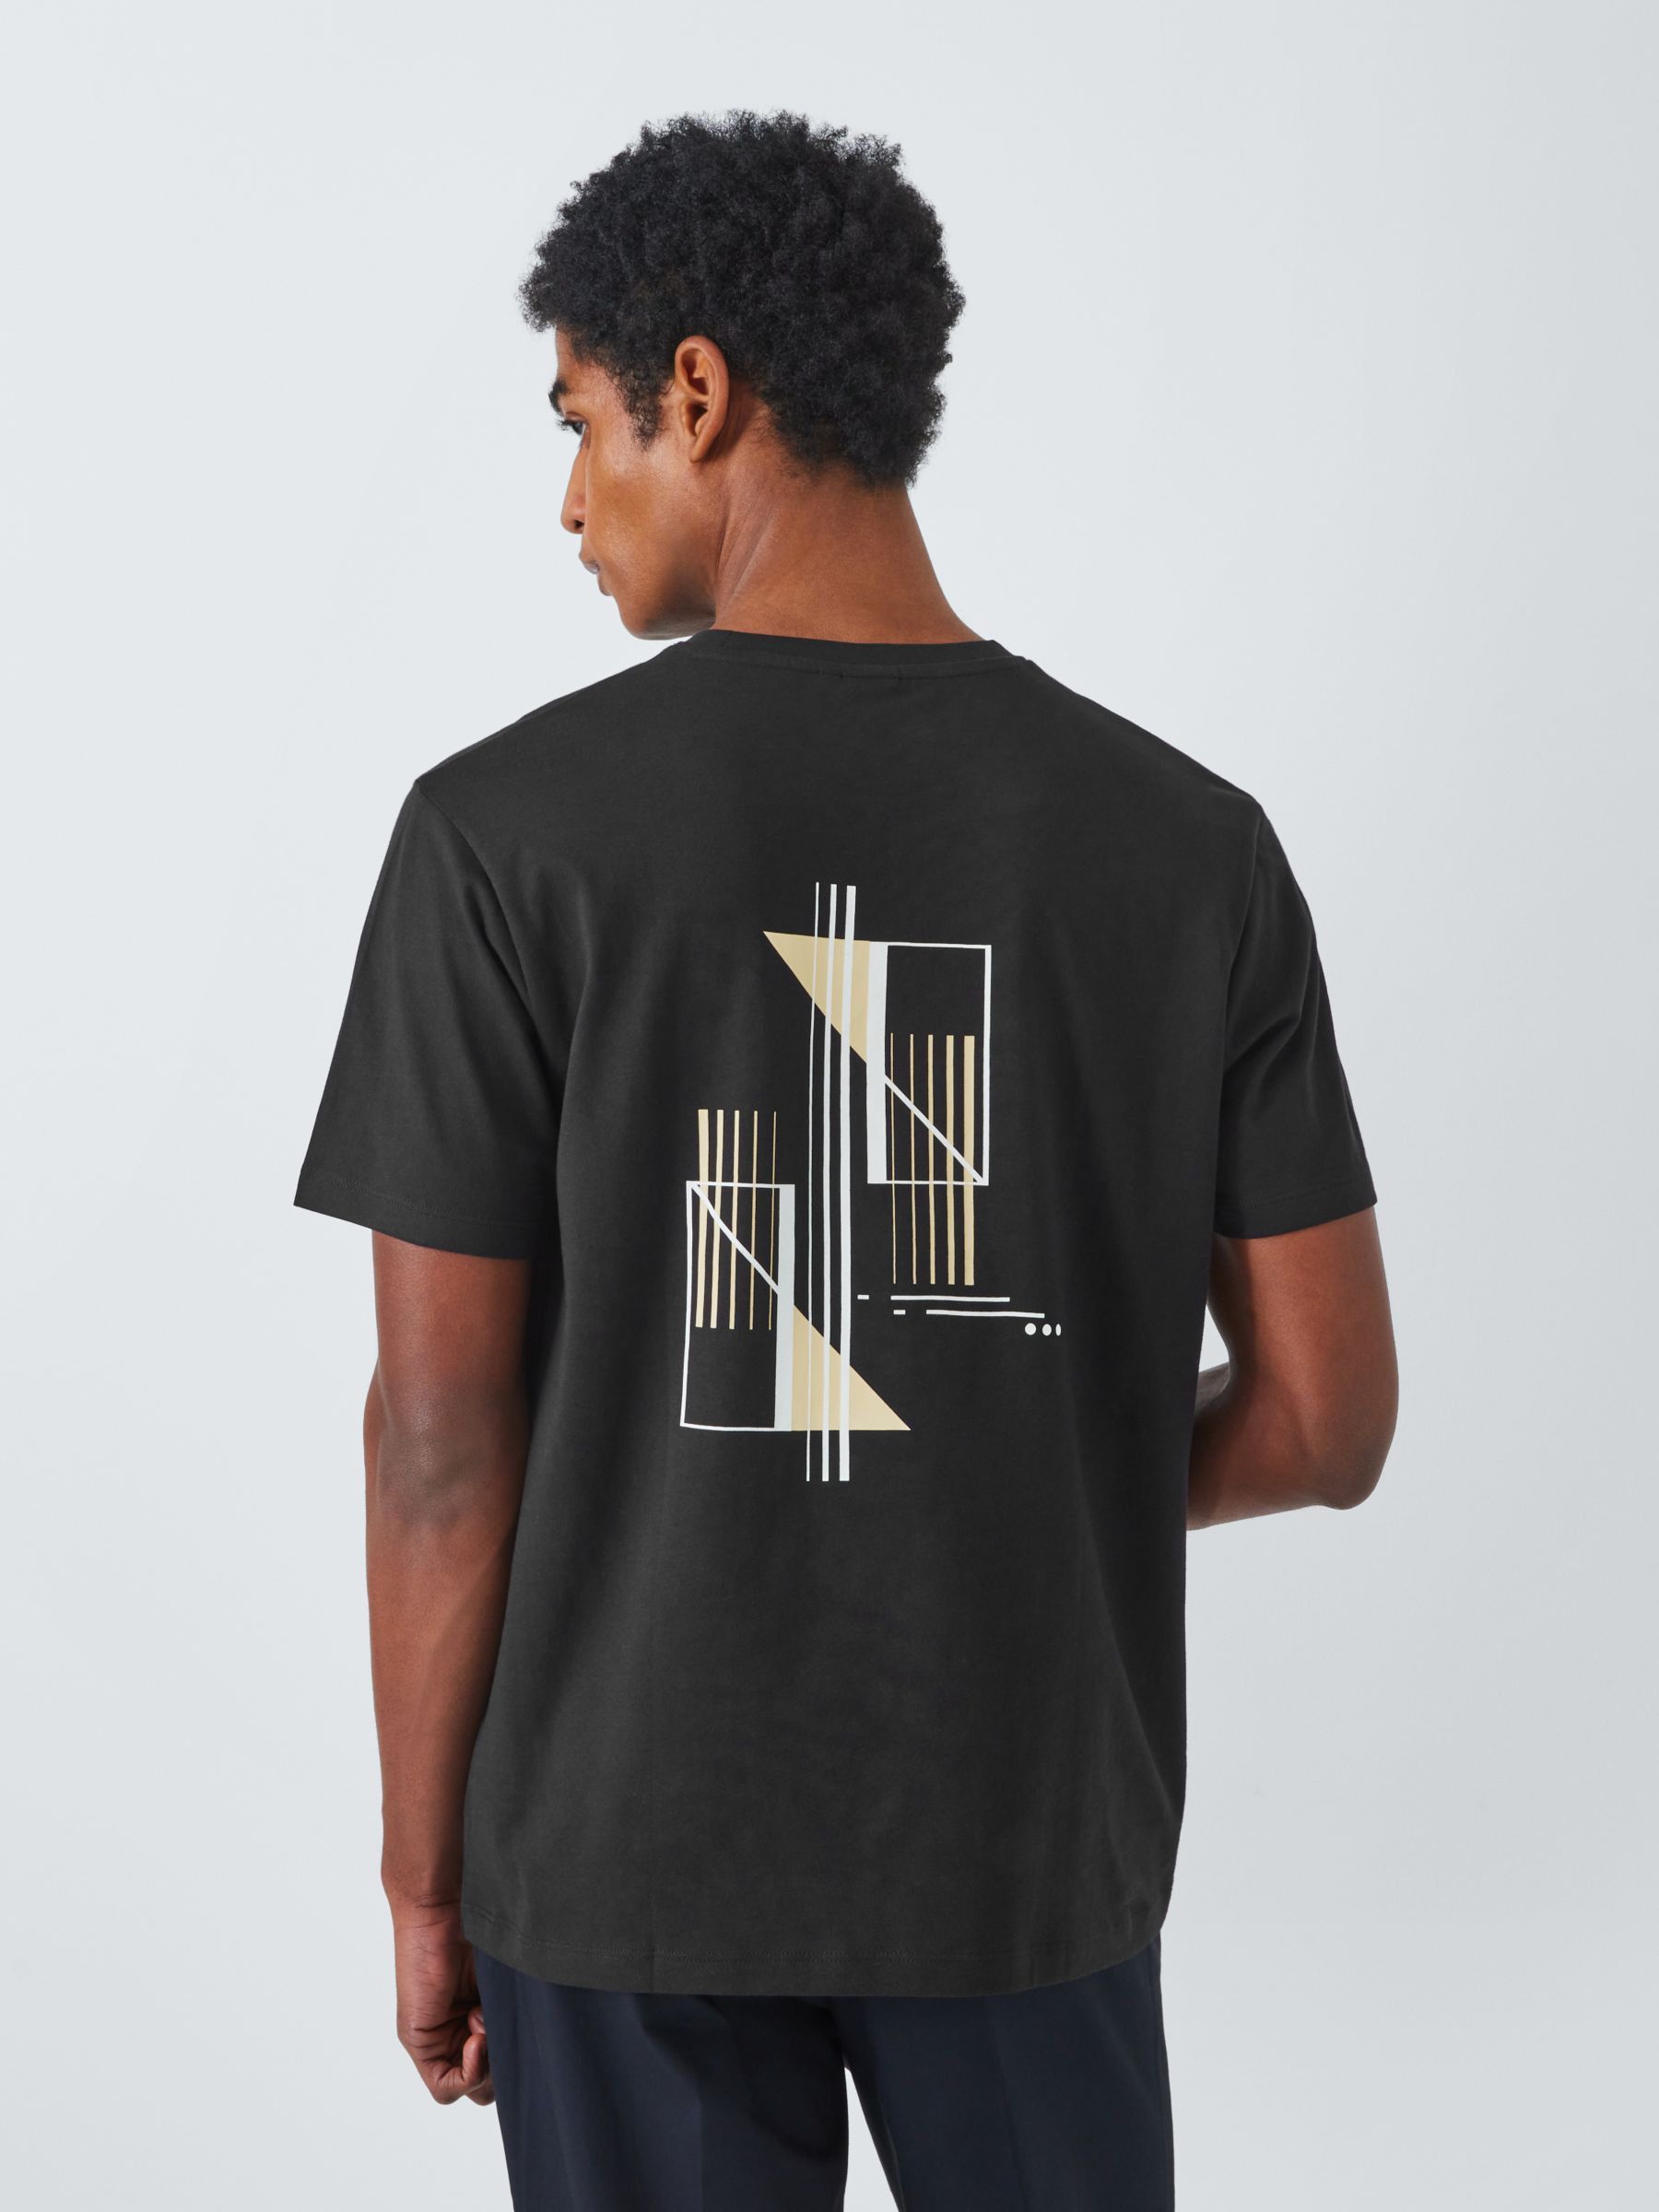 Kin Multi Logo Short Sleeve T-Shirt, Black, XL